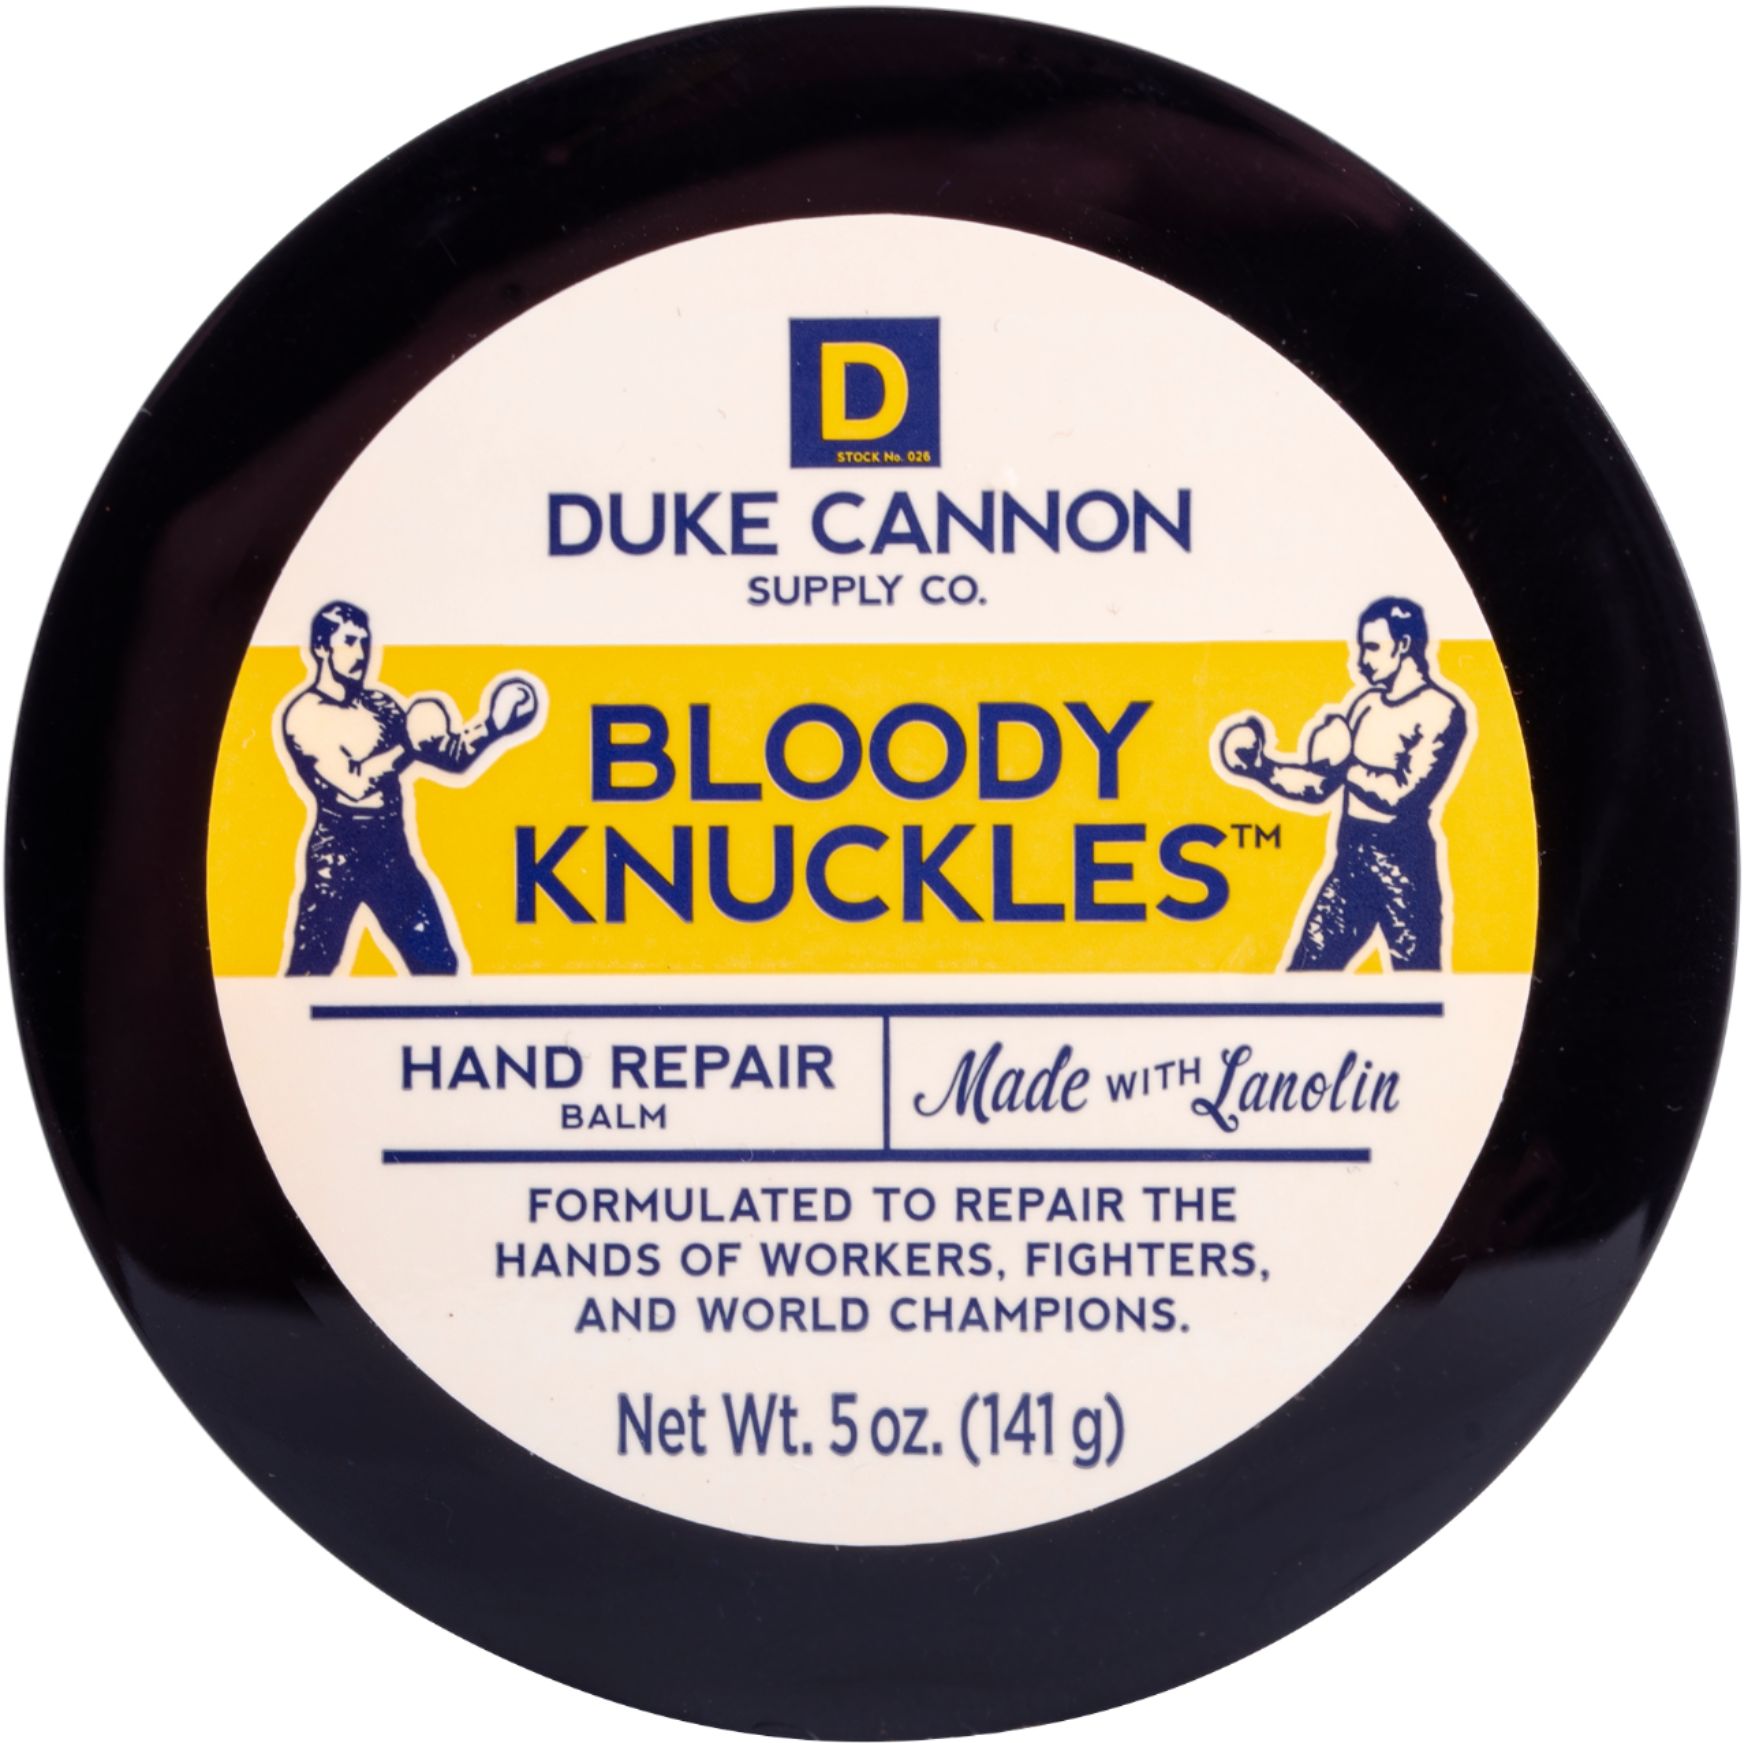 Duke Cannon - Bloody Knuckles Hand Repair Balm - White